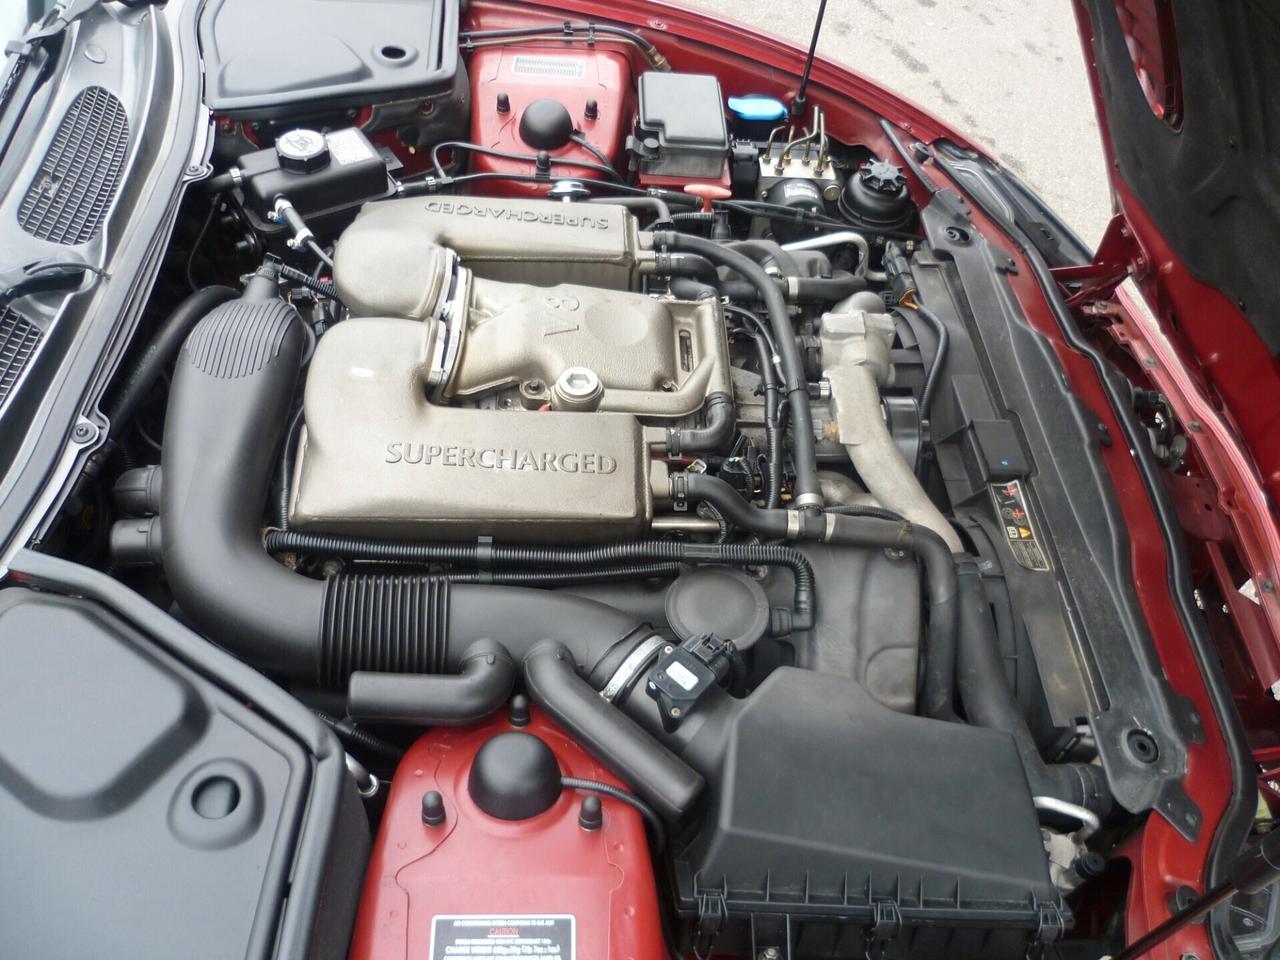 Jaguar XKR 4.2 Coupé rara originale unica